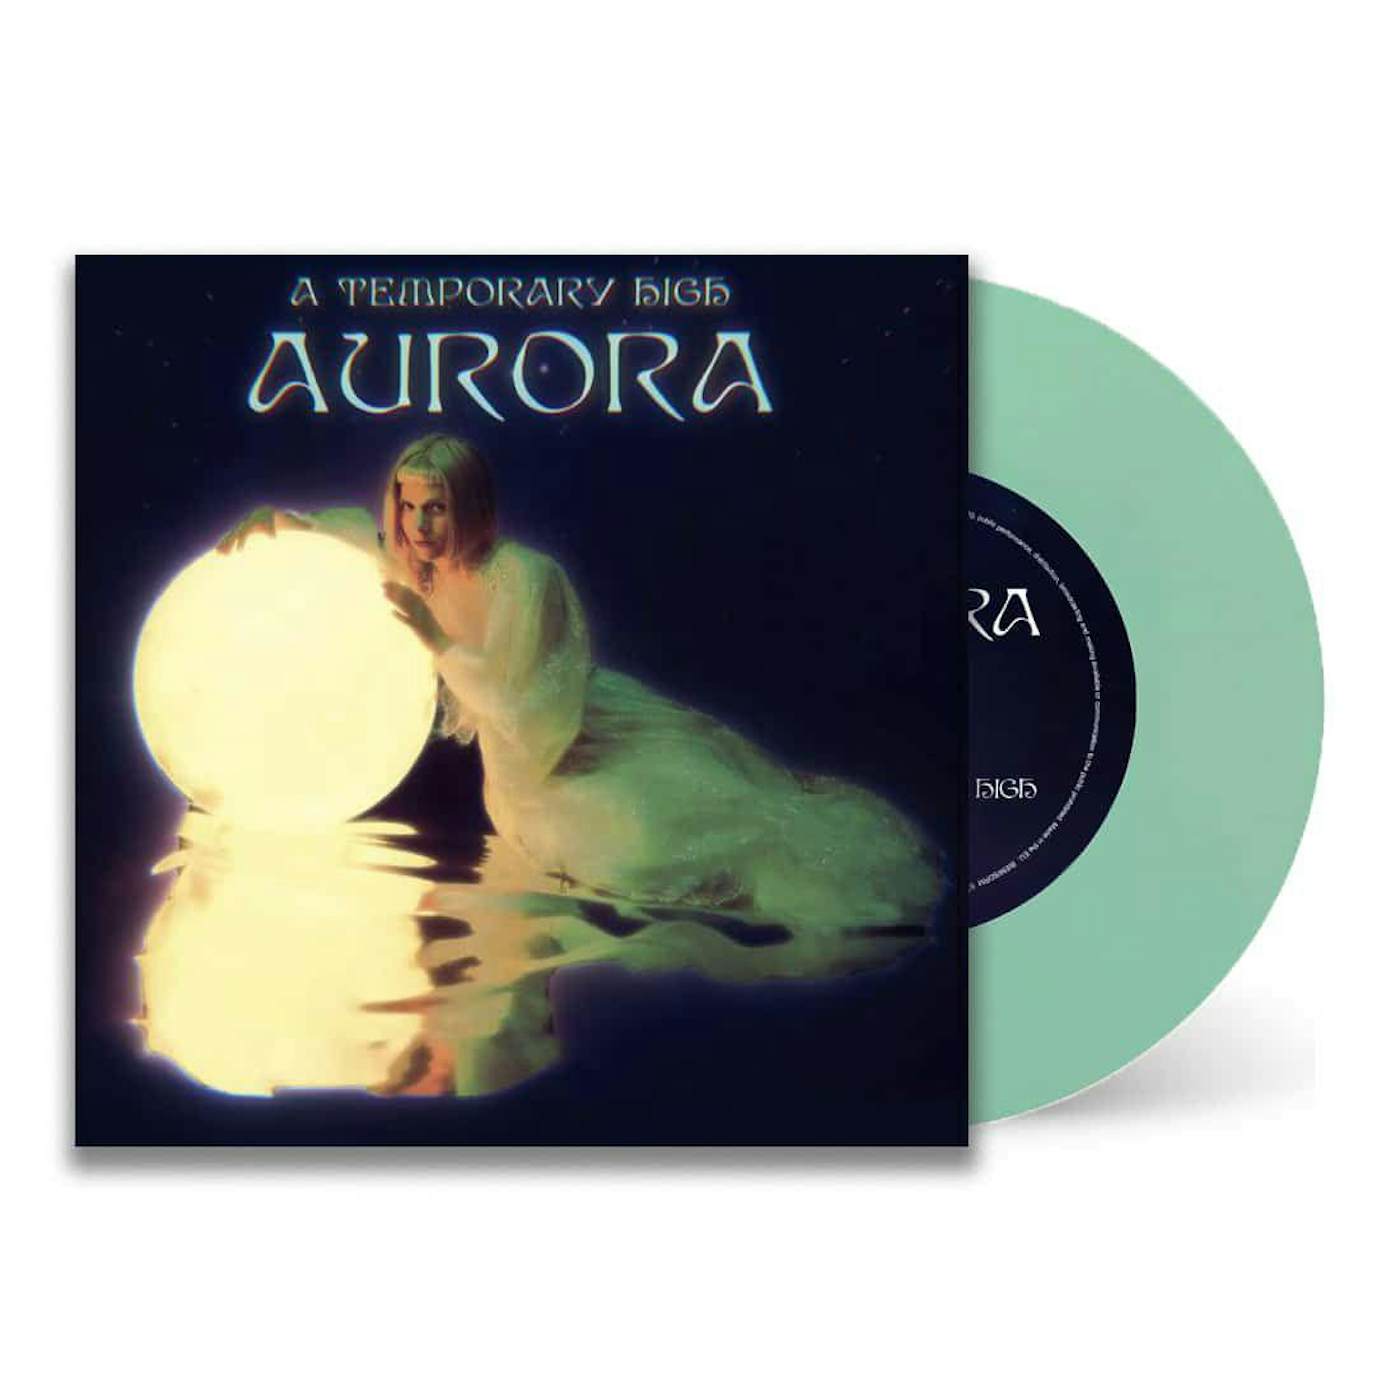 AURORA Temporary High Vinyl Record